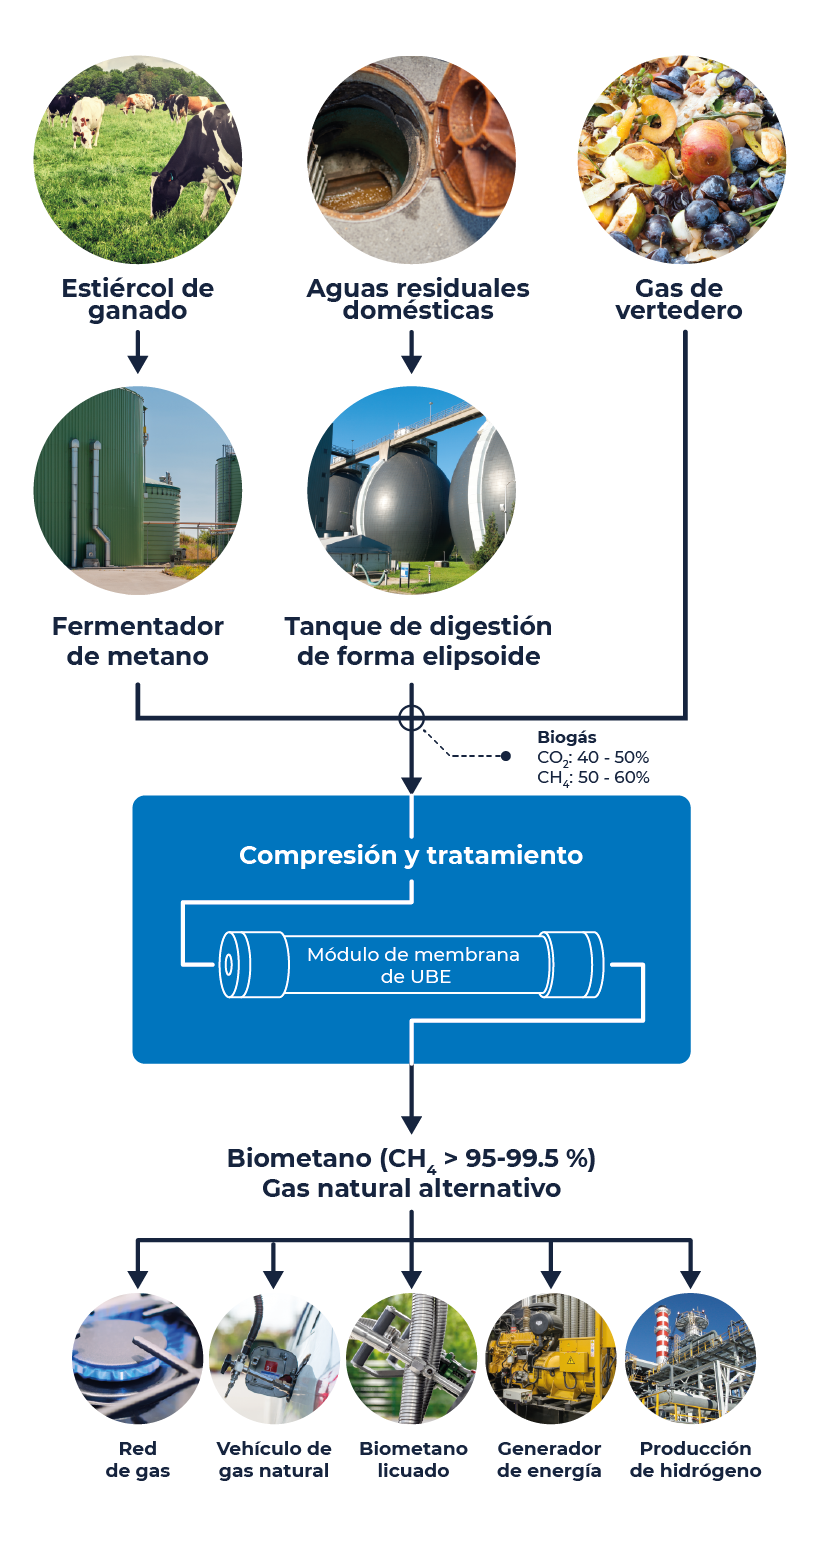 Infographic explaining the biomethane treatment through the Gas Separation Membrane Module